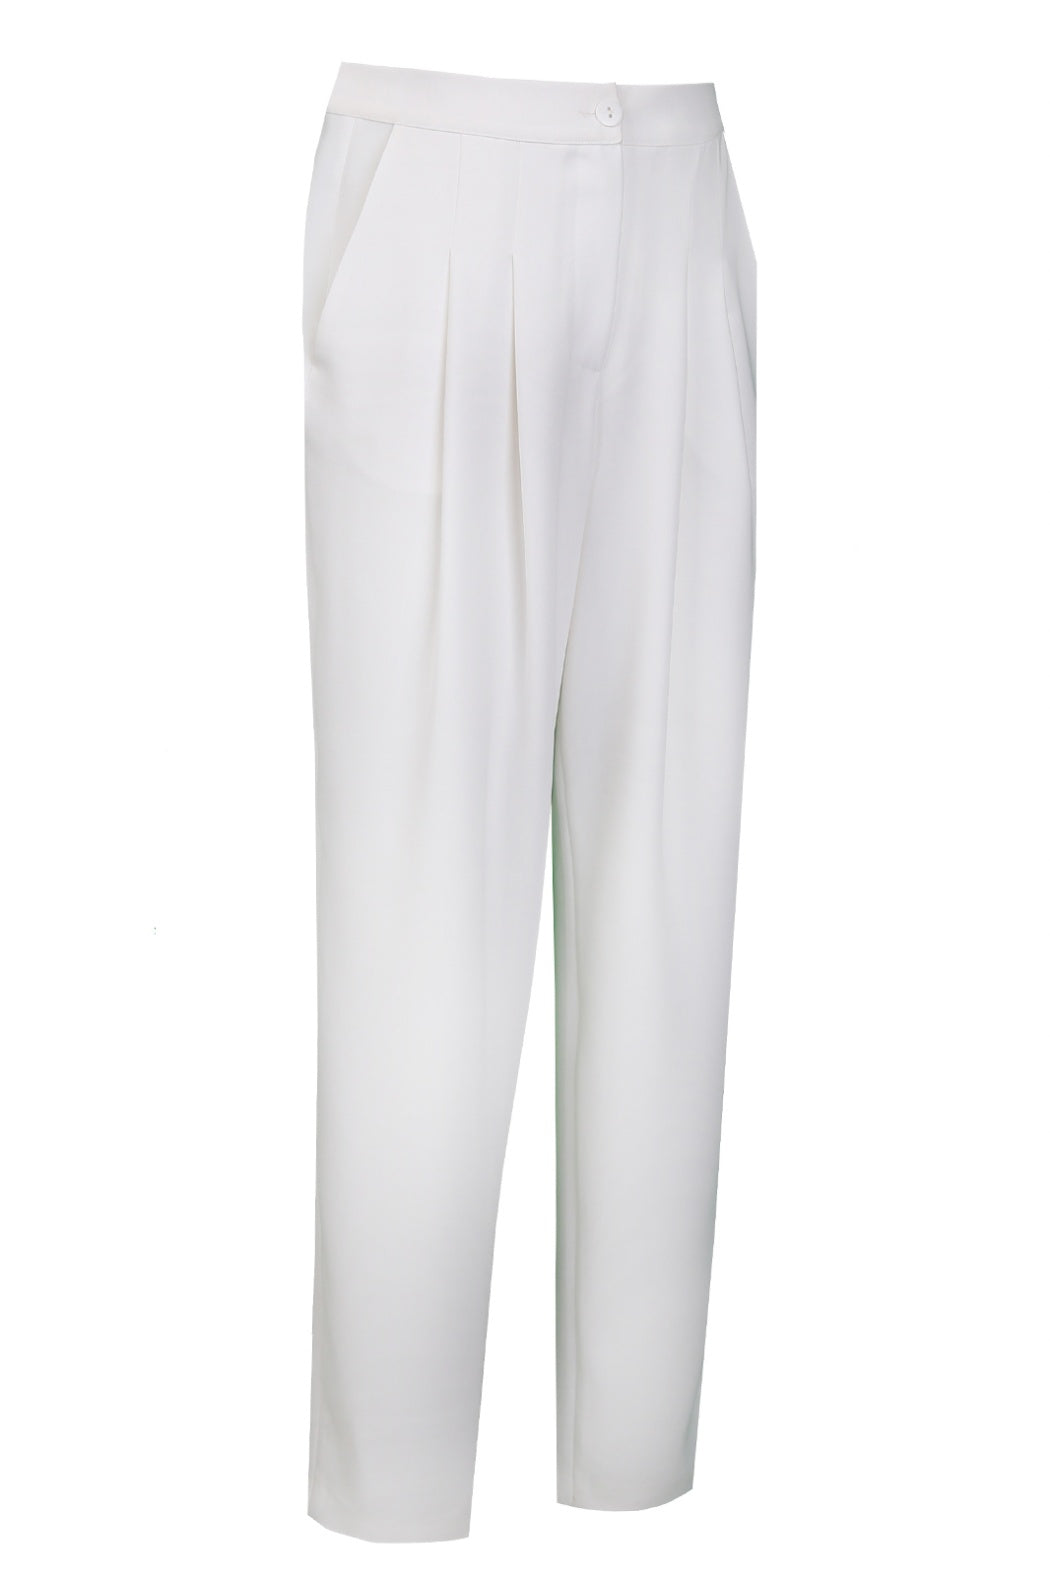 Marvel White Pleated Crepe Women's Pants